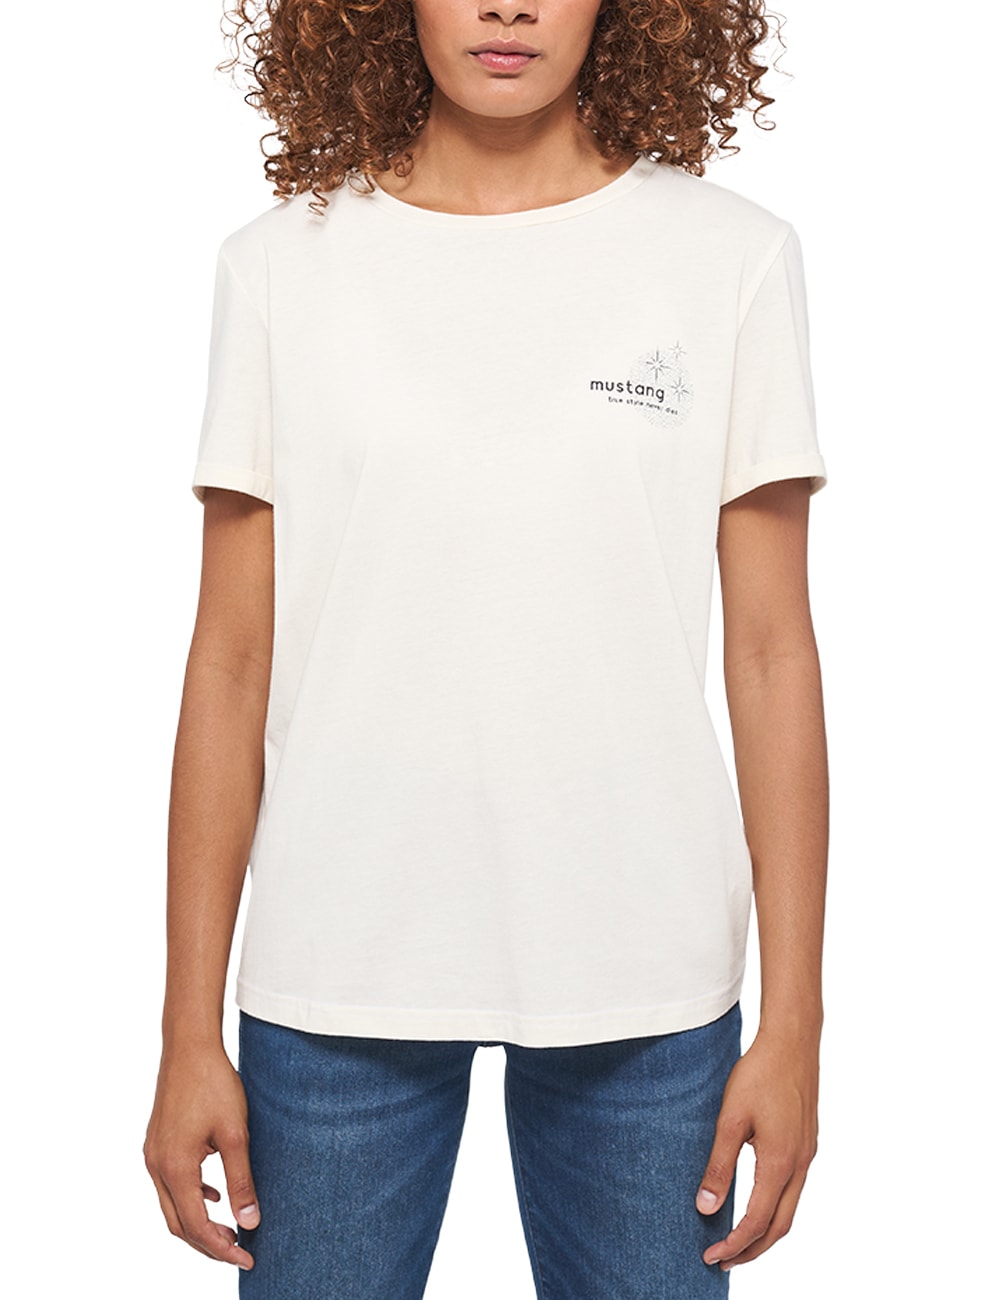 MUSTANG Kurzarmshirt »Mustang C T-Shirt Chestprint« kaufen Style Alina